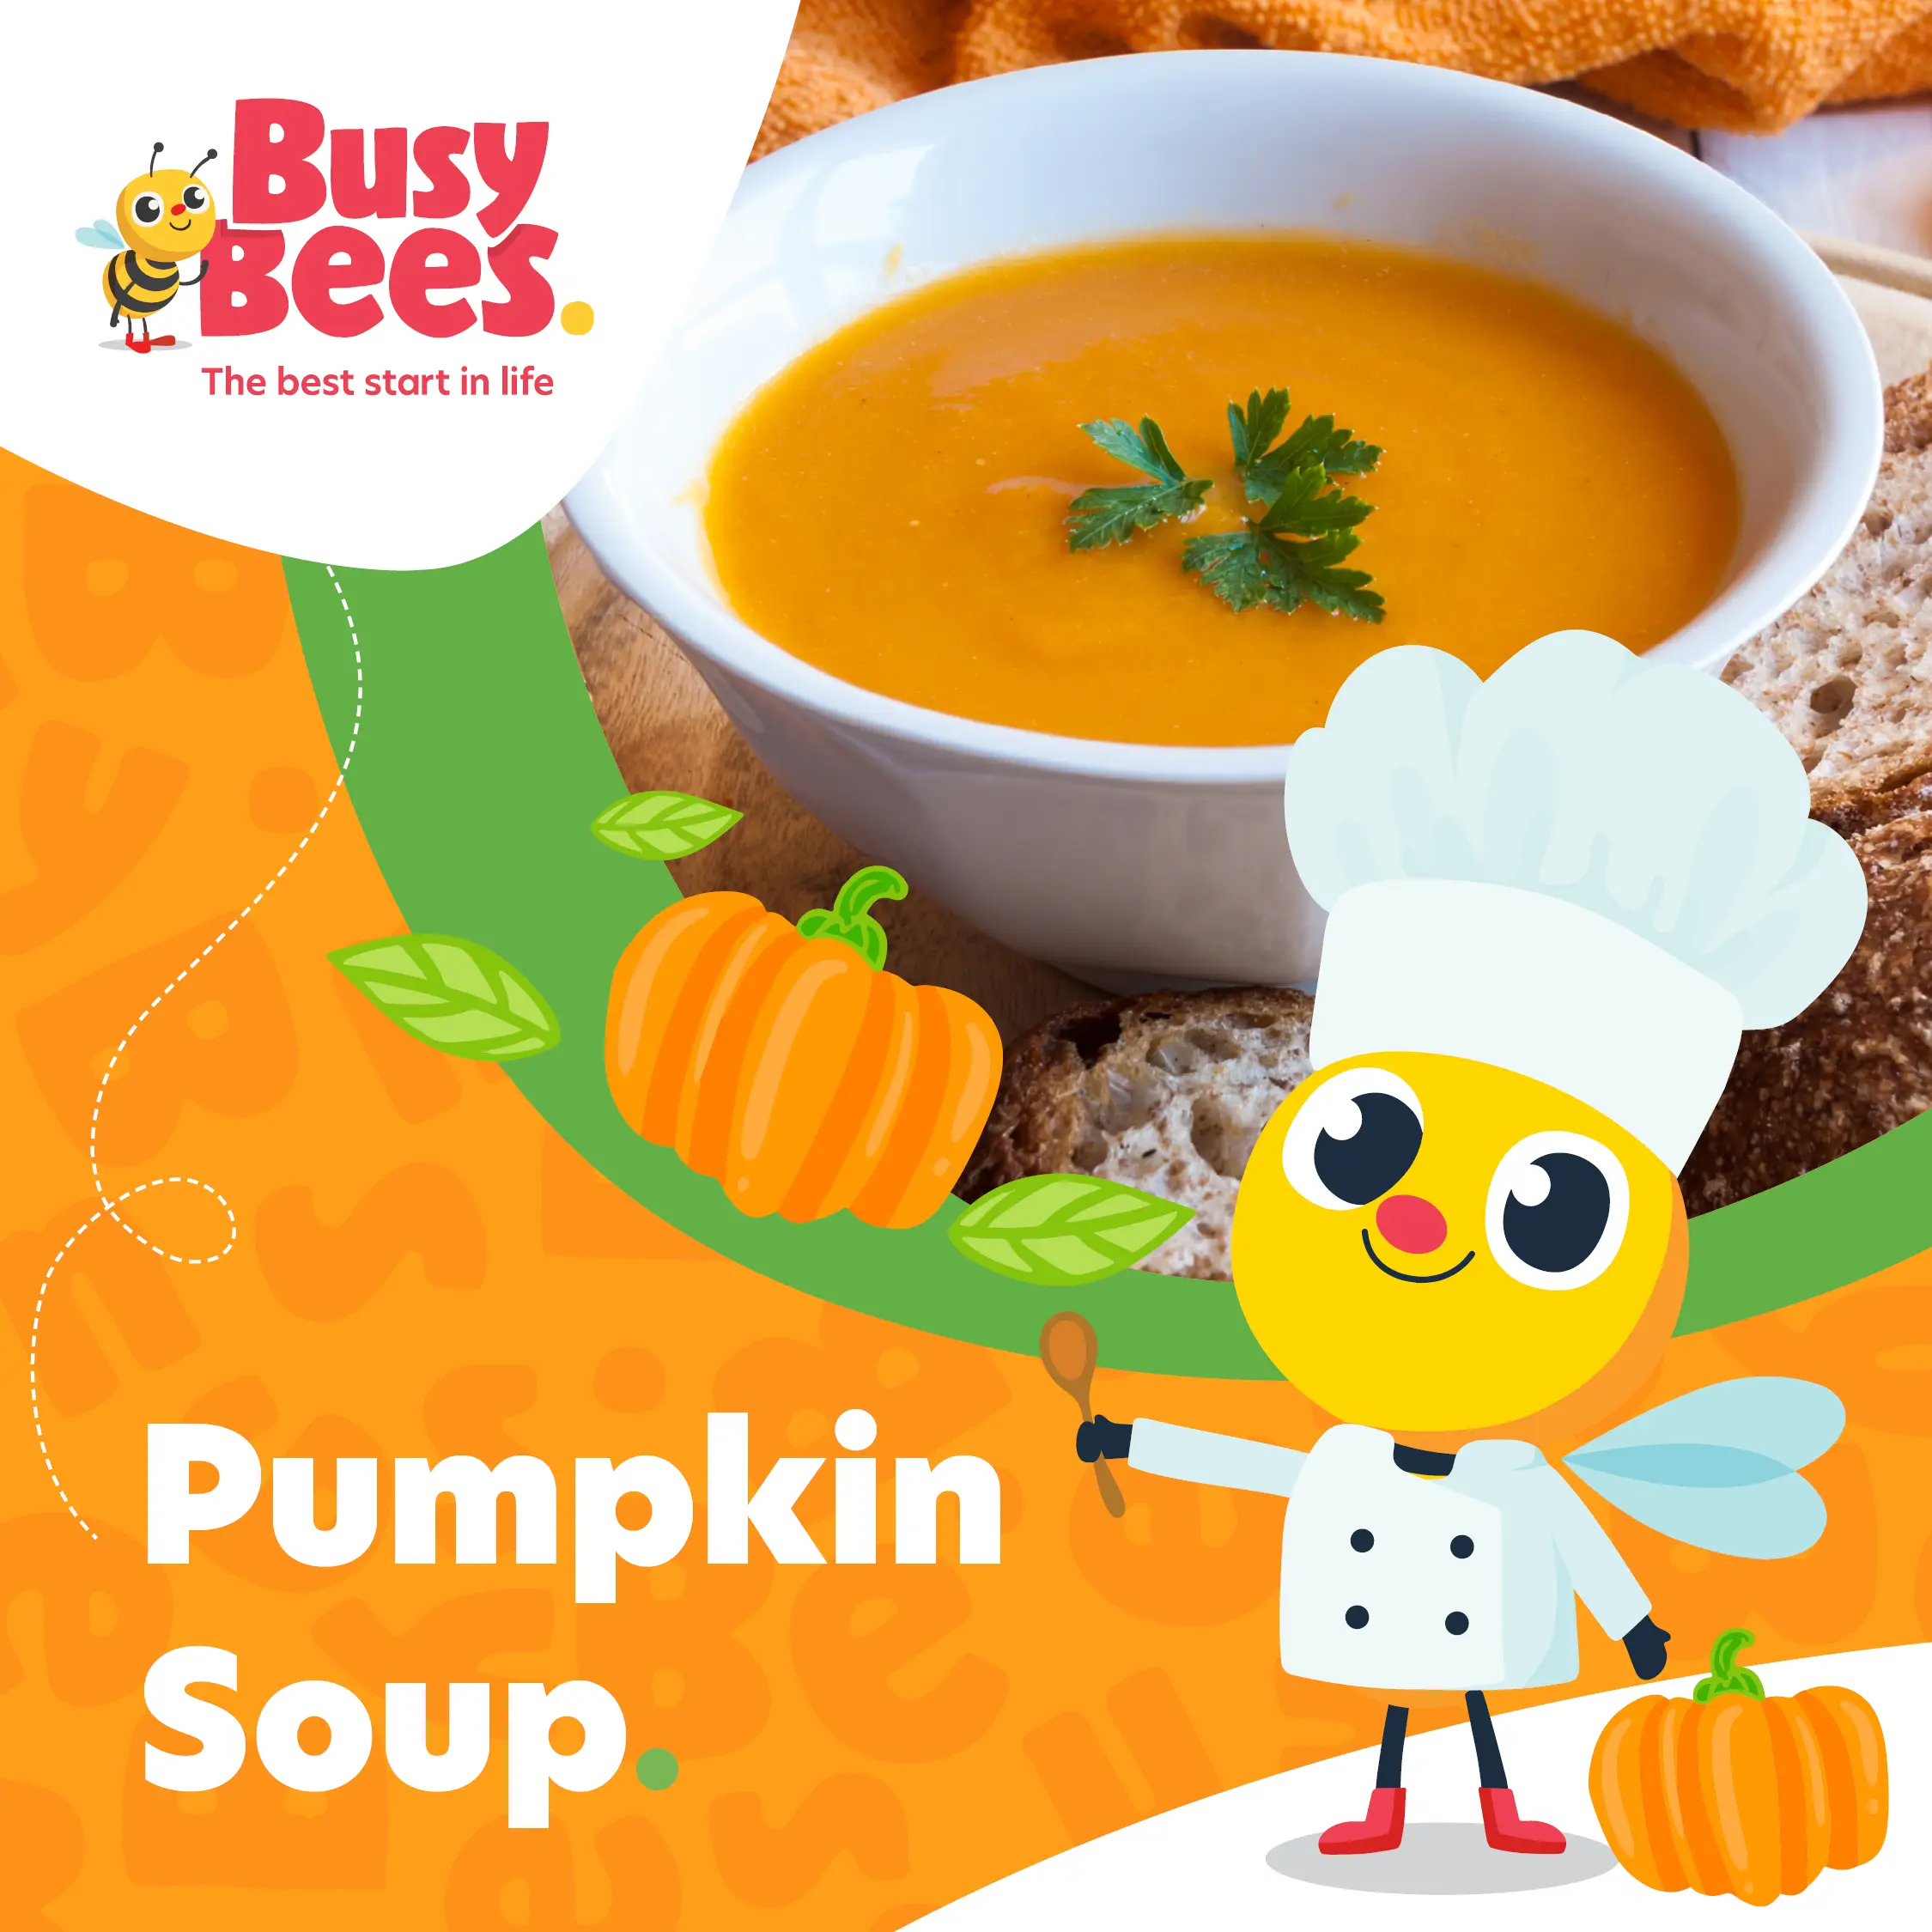 pumpkin soup and cartoon chef Buzz Bee